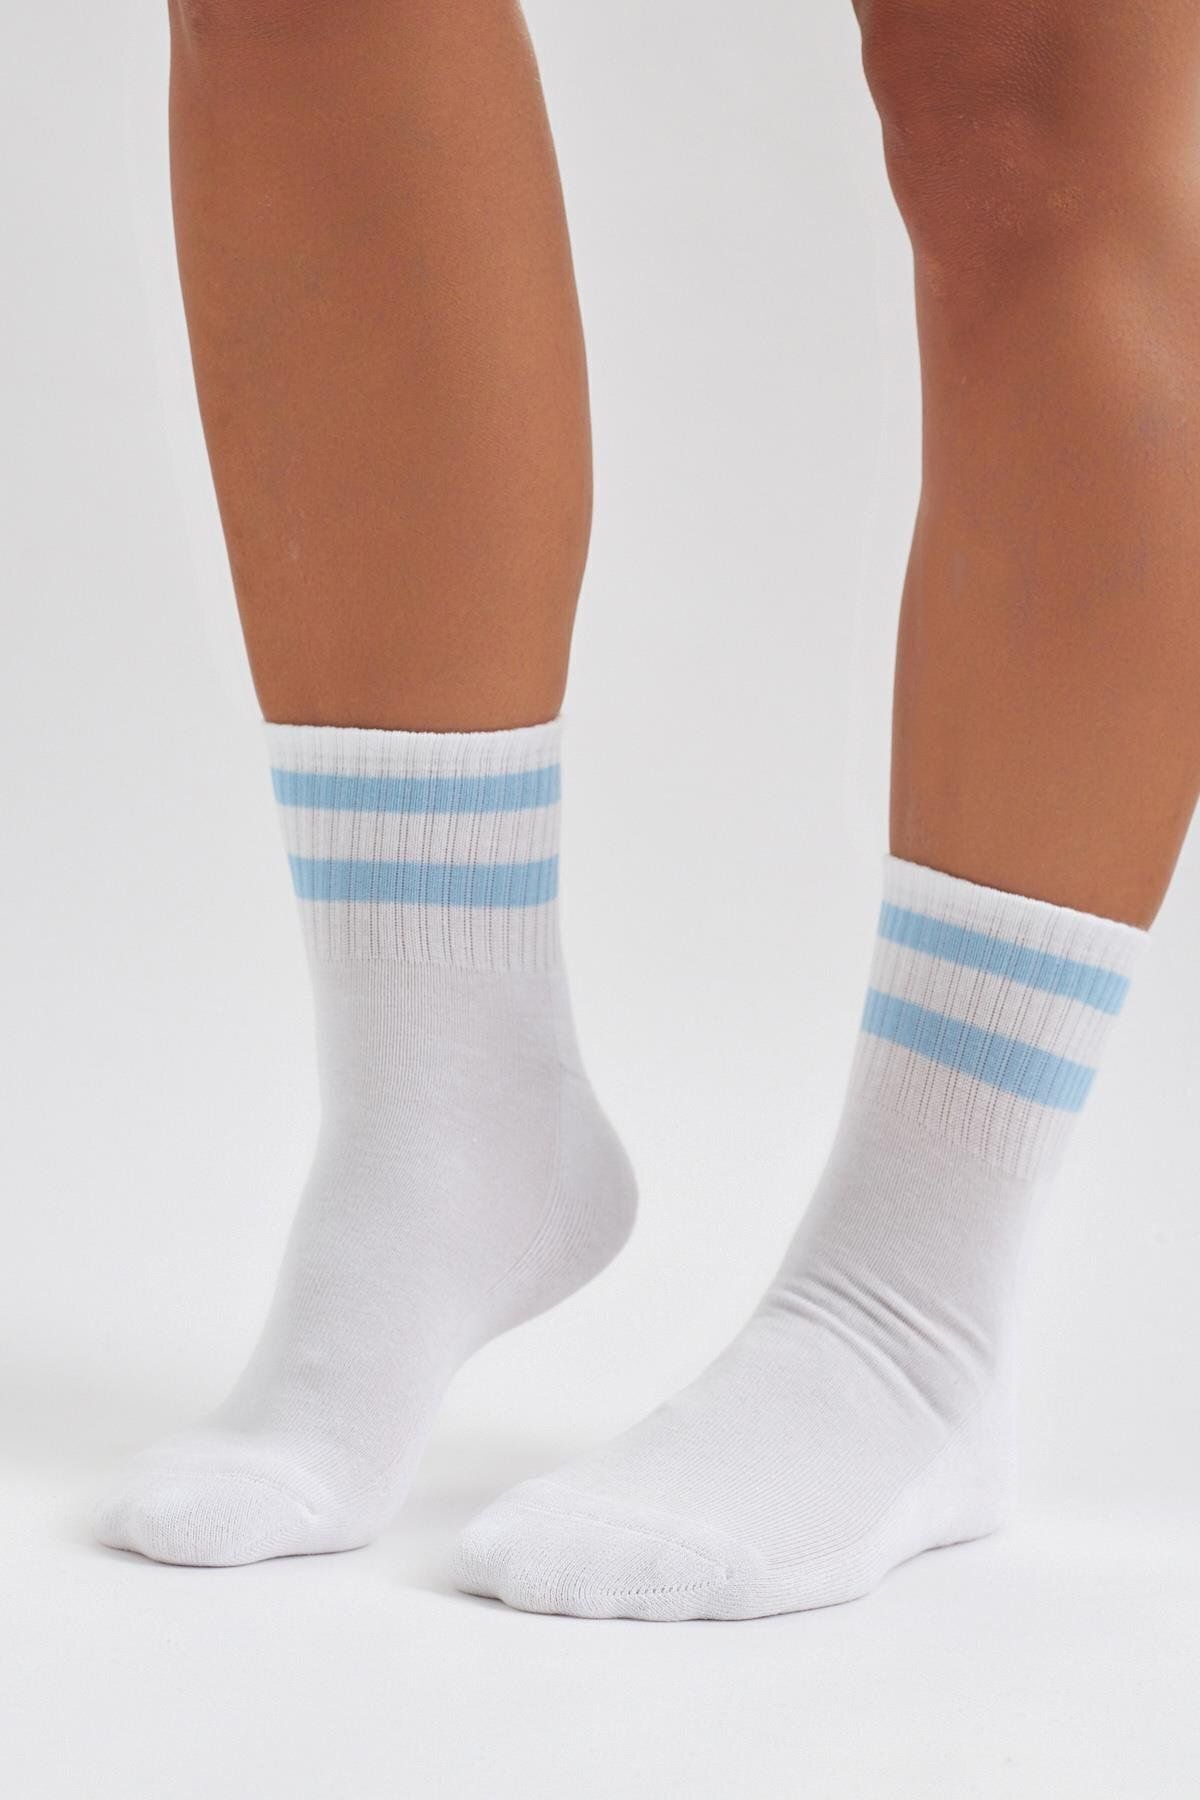 Katia & Bony Erkek Havlu Taban Çizgili Kısa Konç Soket Çorap Beyaz/mavi